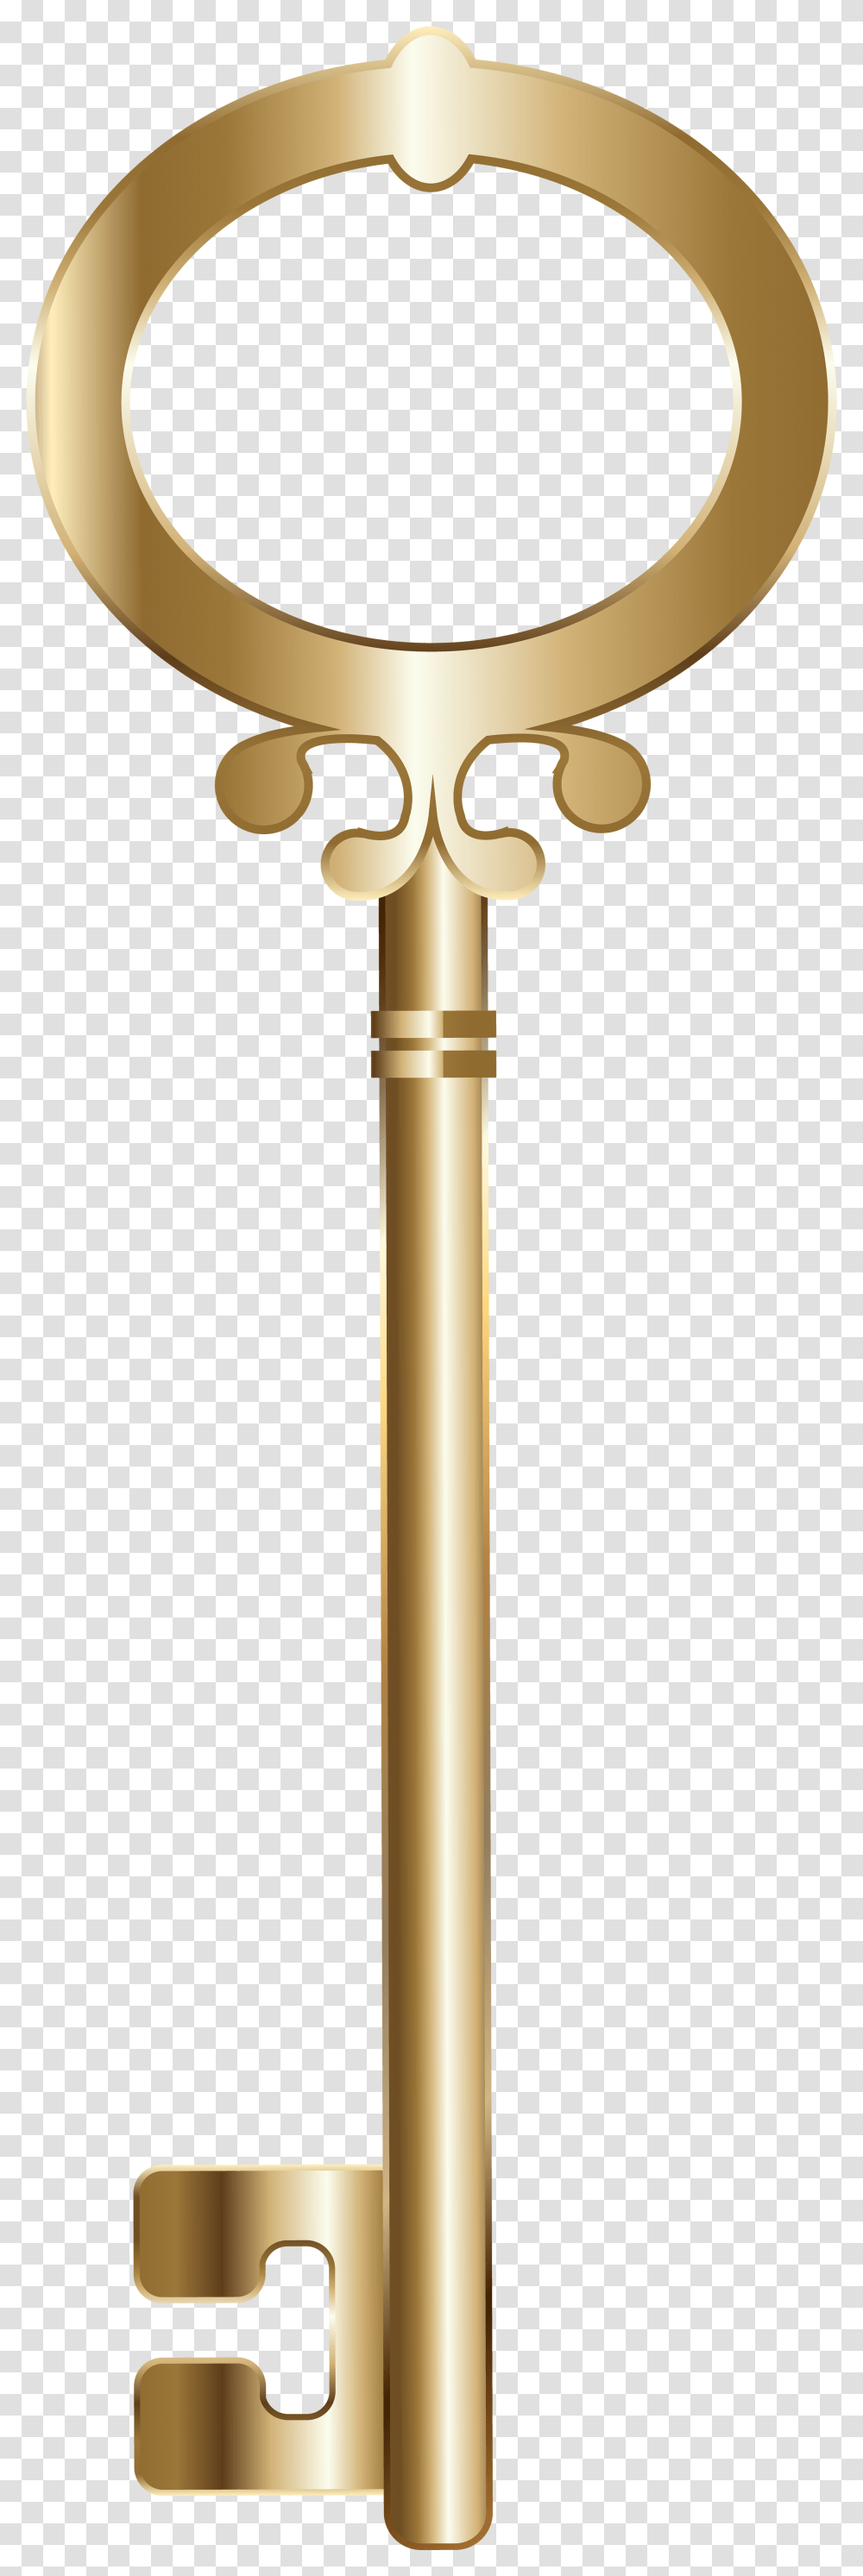 Gold Key Golden Key Clipart, Weapon, Weaponry, Lamp, Emblem Transparent Png